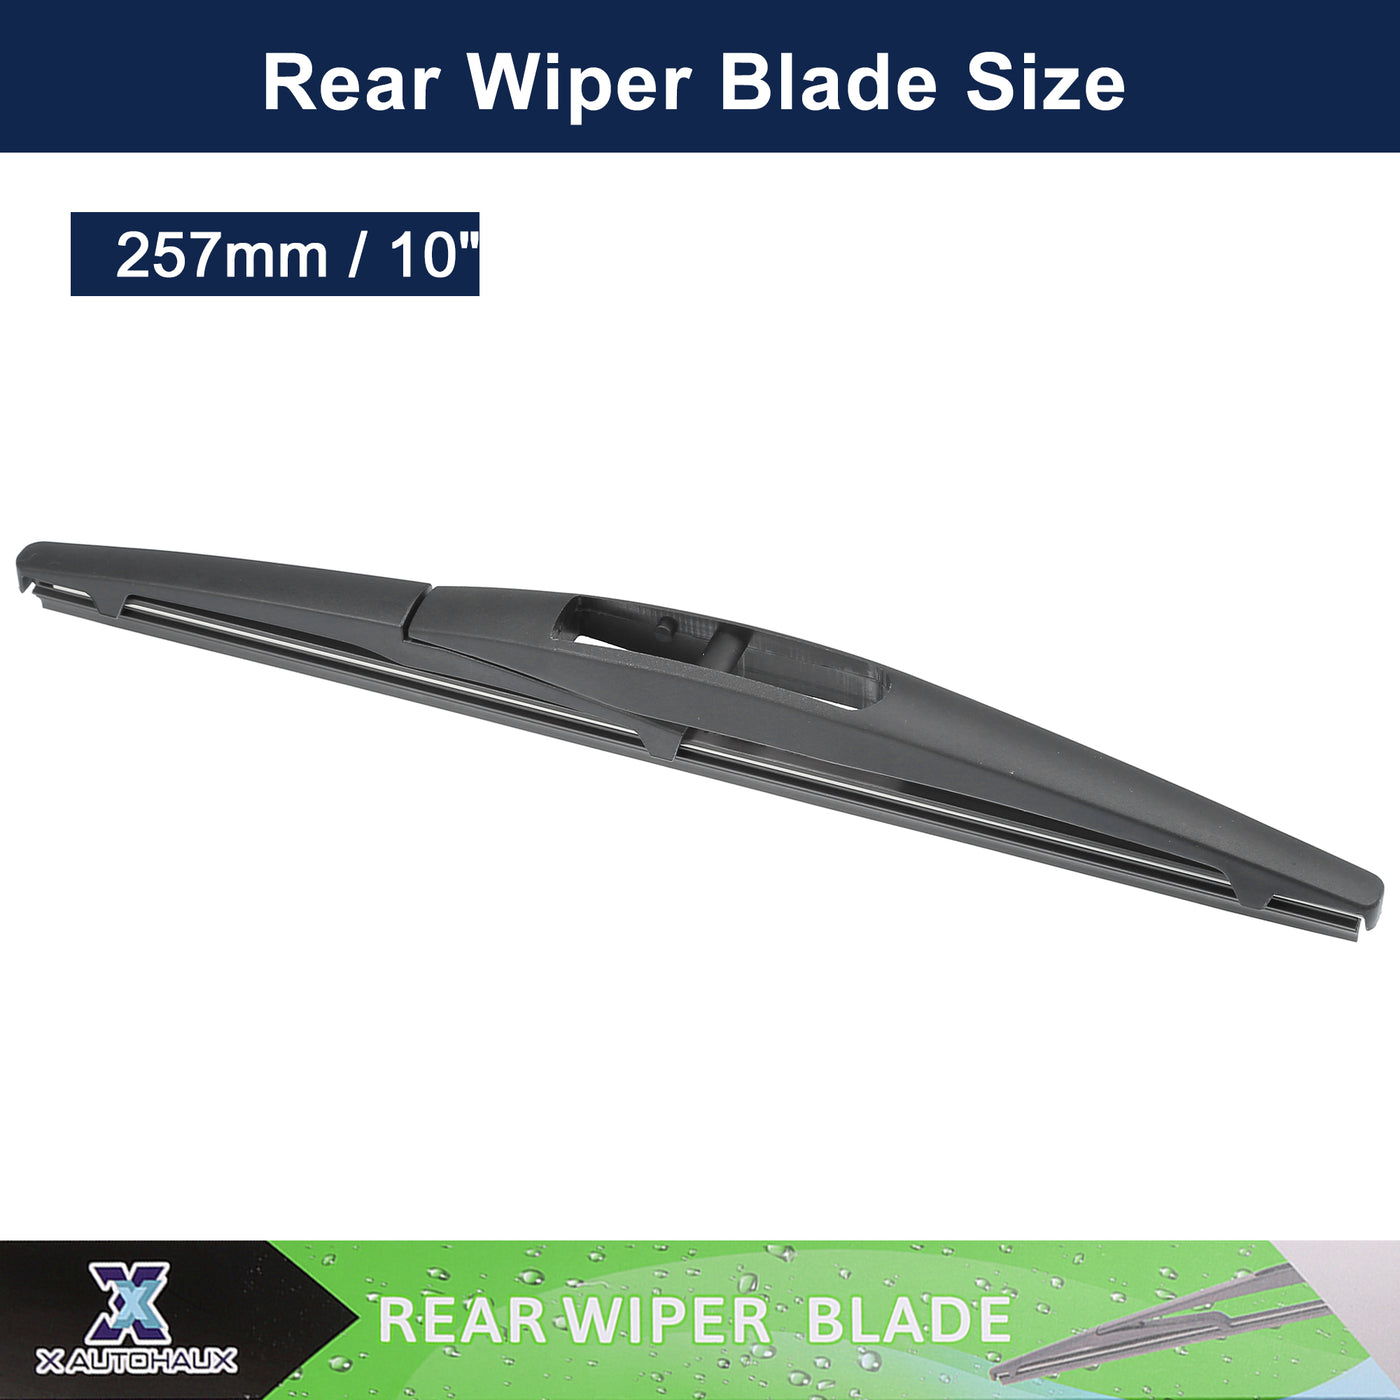 X AUTOHAUX 2pcs Rear Windshield Wiper Blades Replacement for Infiniti QX56 2008-2016 for Suzuki Swift 2005-2016 for Suzuki Sx4 2006-2016